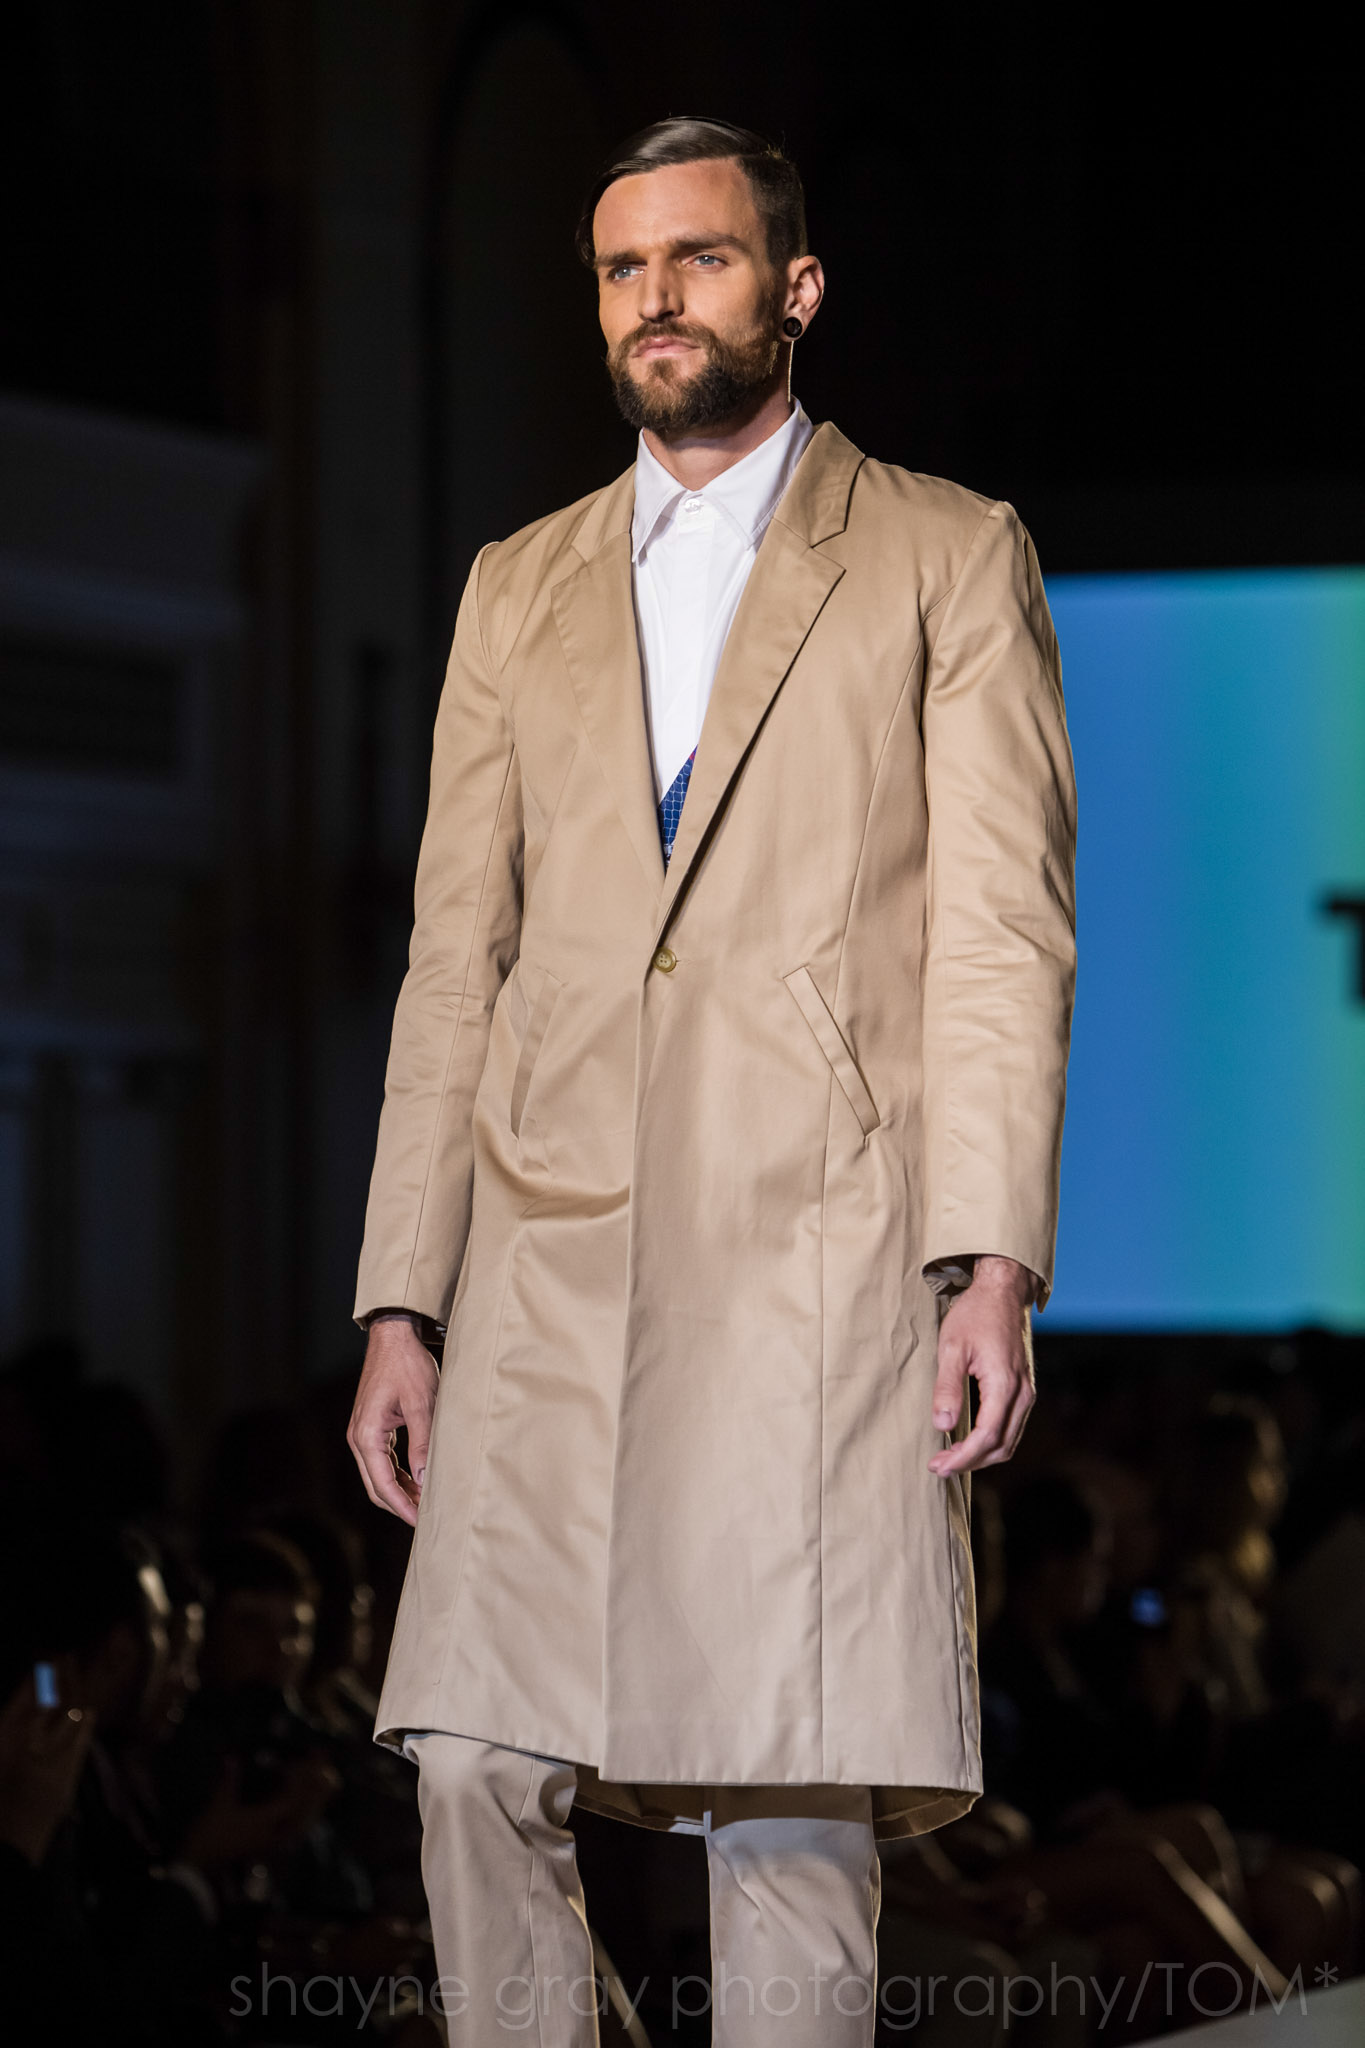 Shayne-Gray-Toronto-men's-fashion_week-TOM-paul-nathaphol-7983.jpg